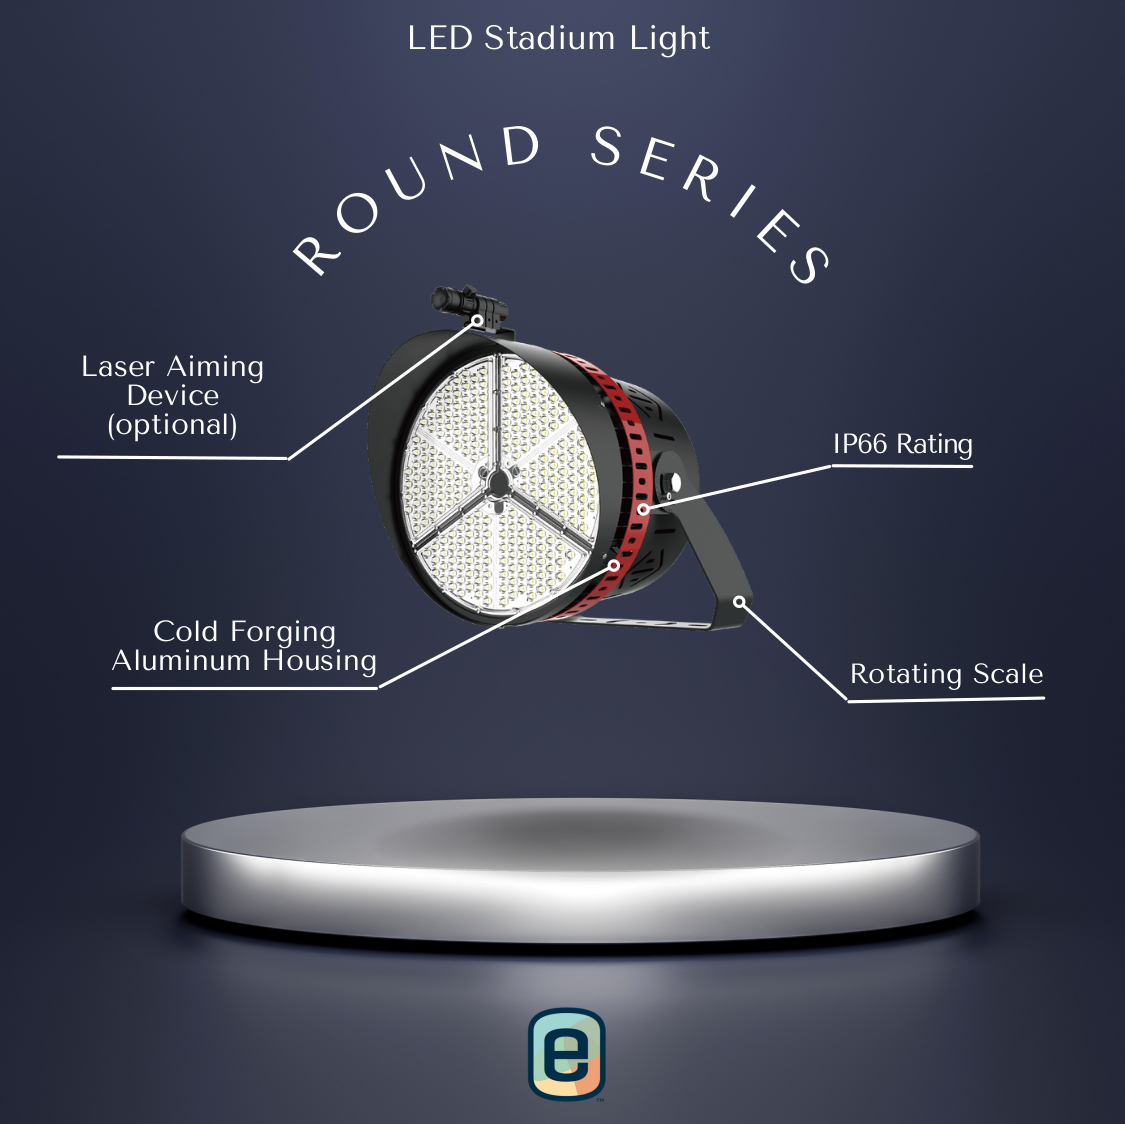 LED Stadium Light: Round Series